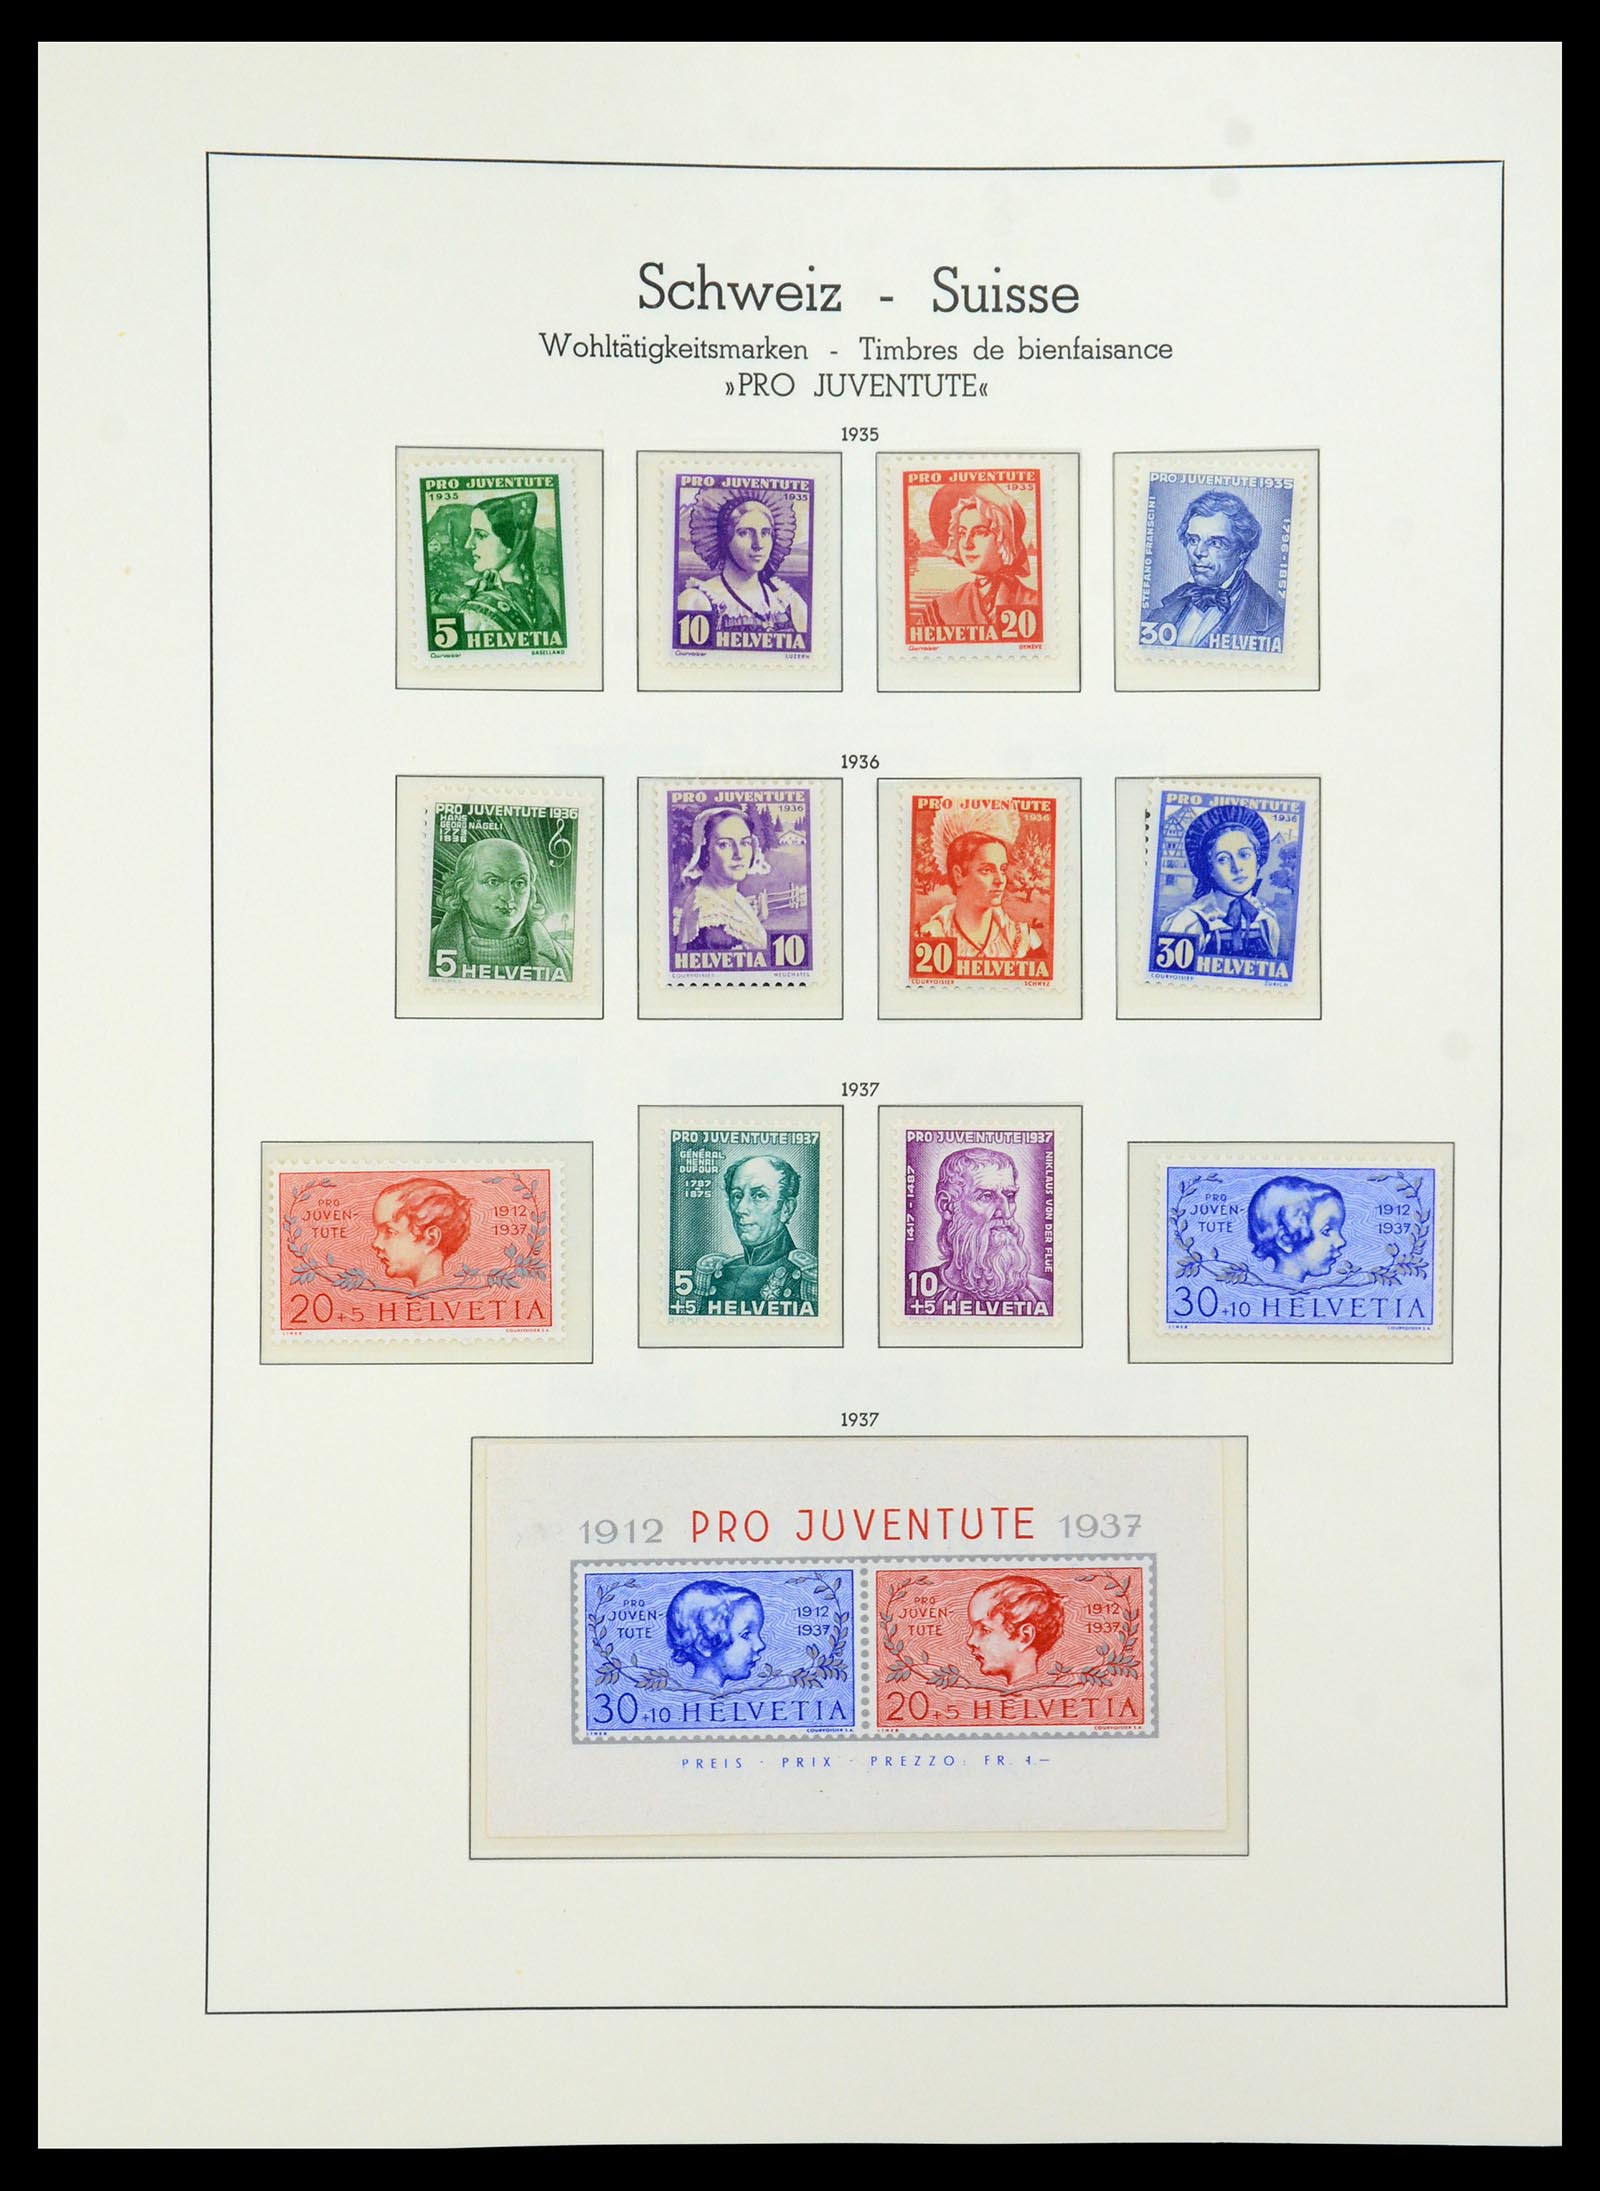 36284 038 - Stamp collection 36284 Switzerland 1854-2006.